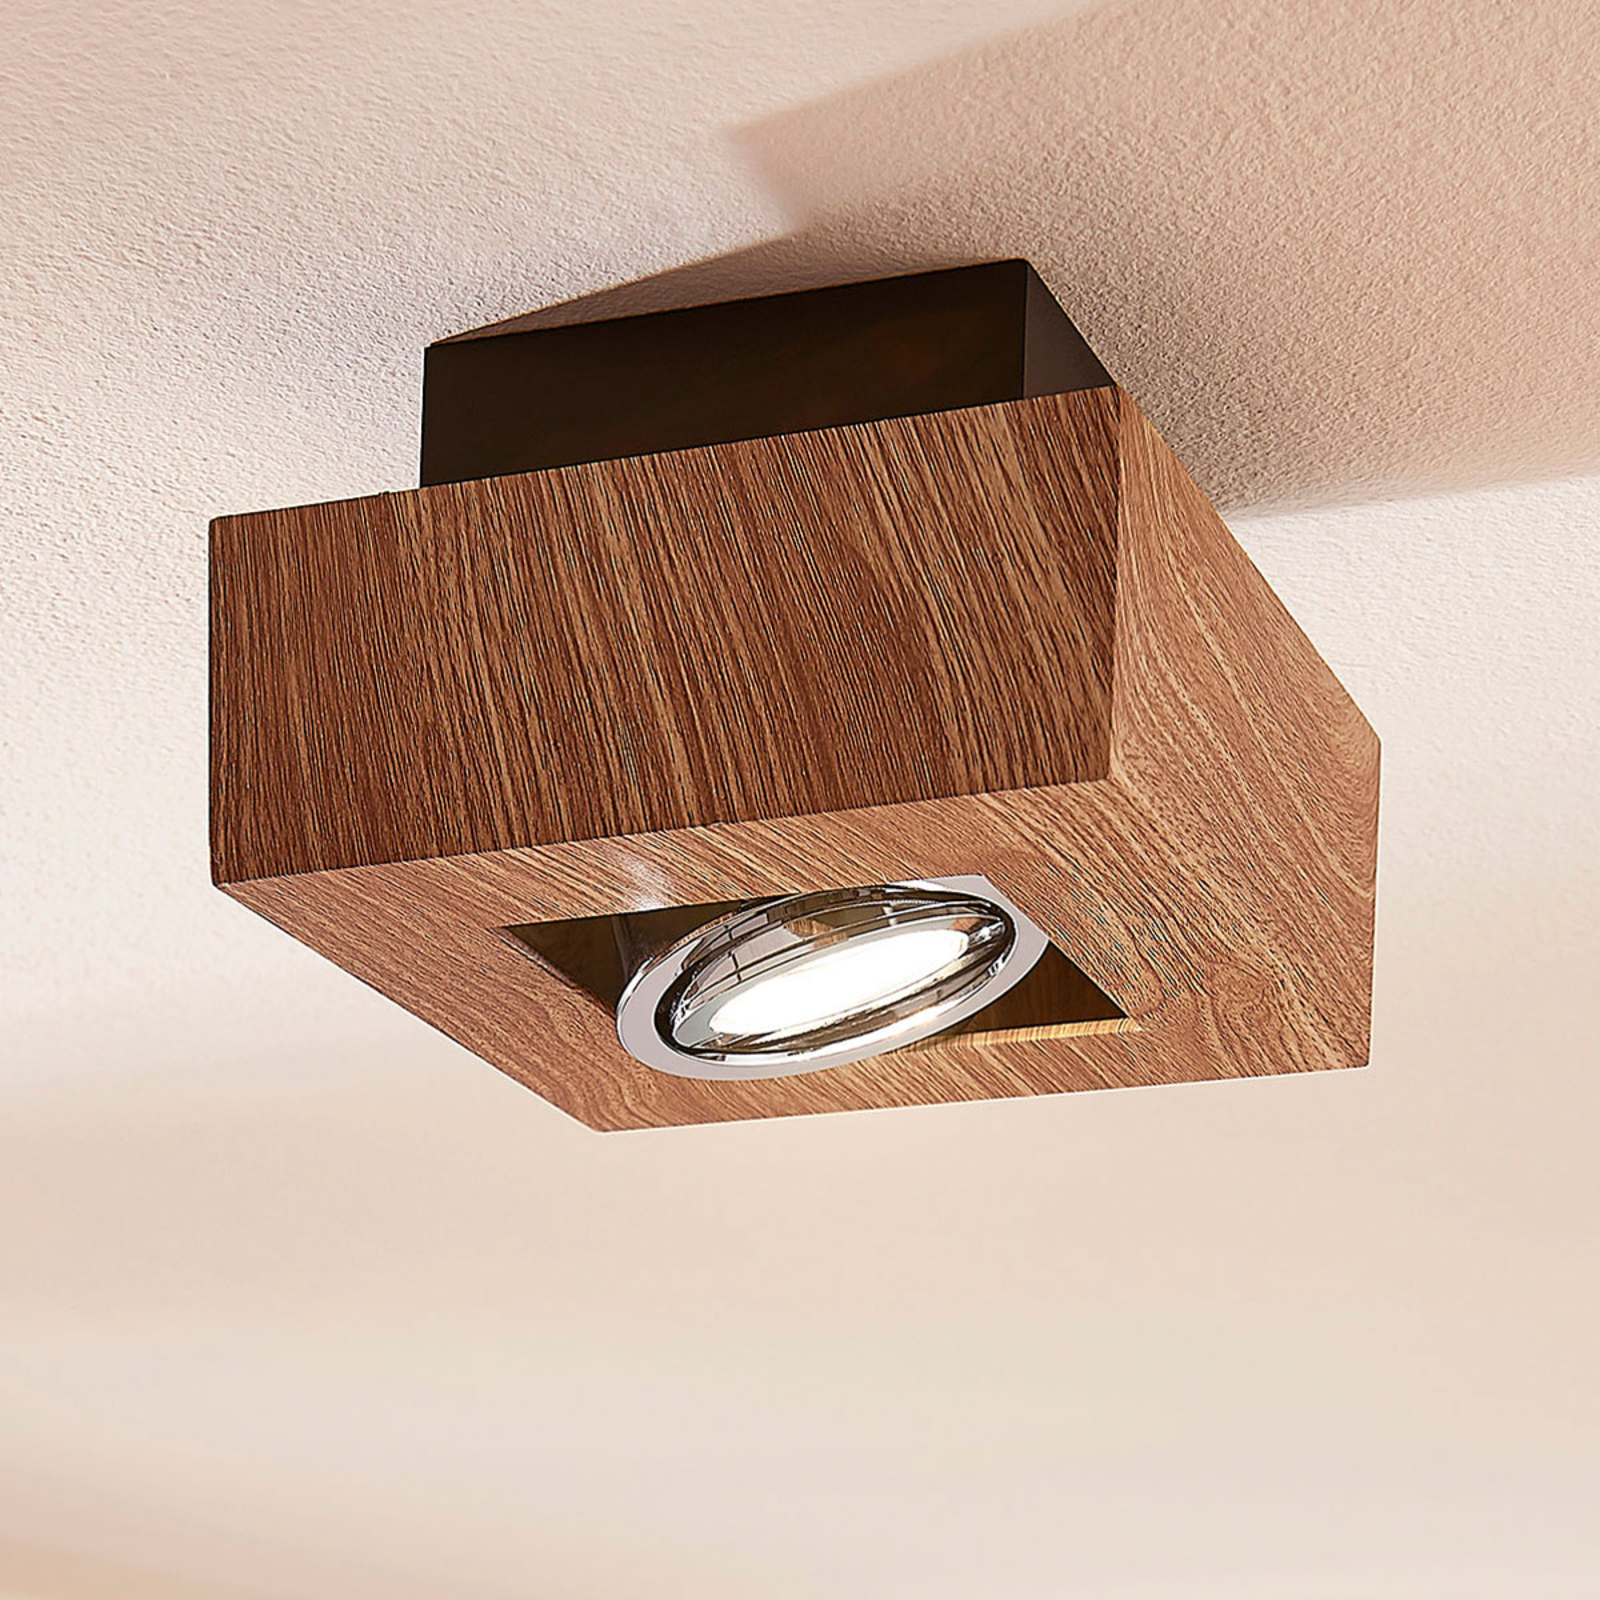 Vince ceiling light in wood look, 14 x 14 cm